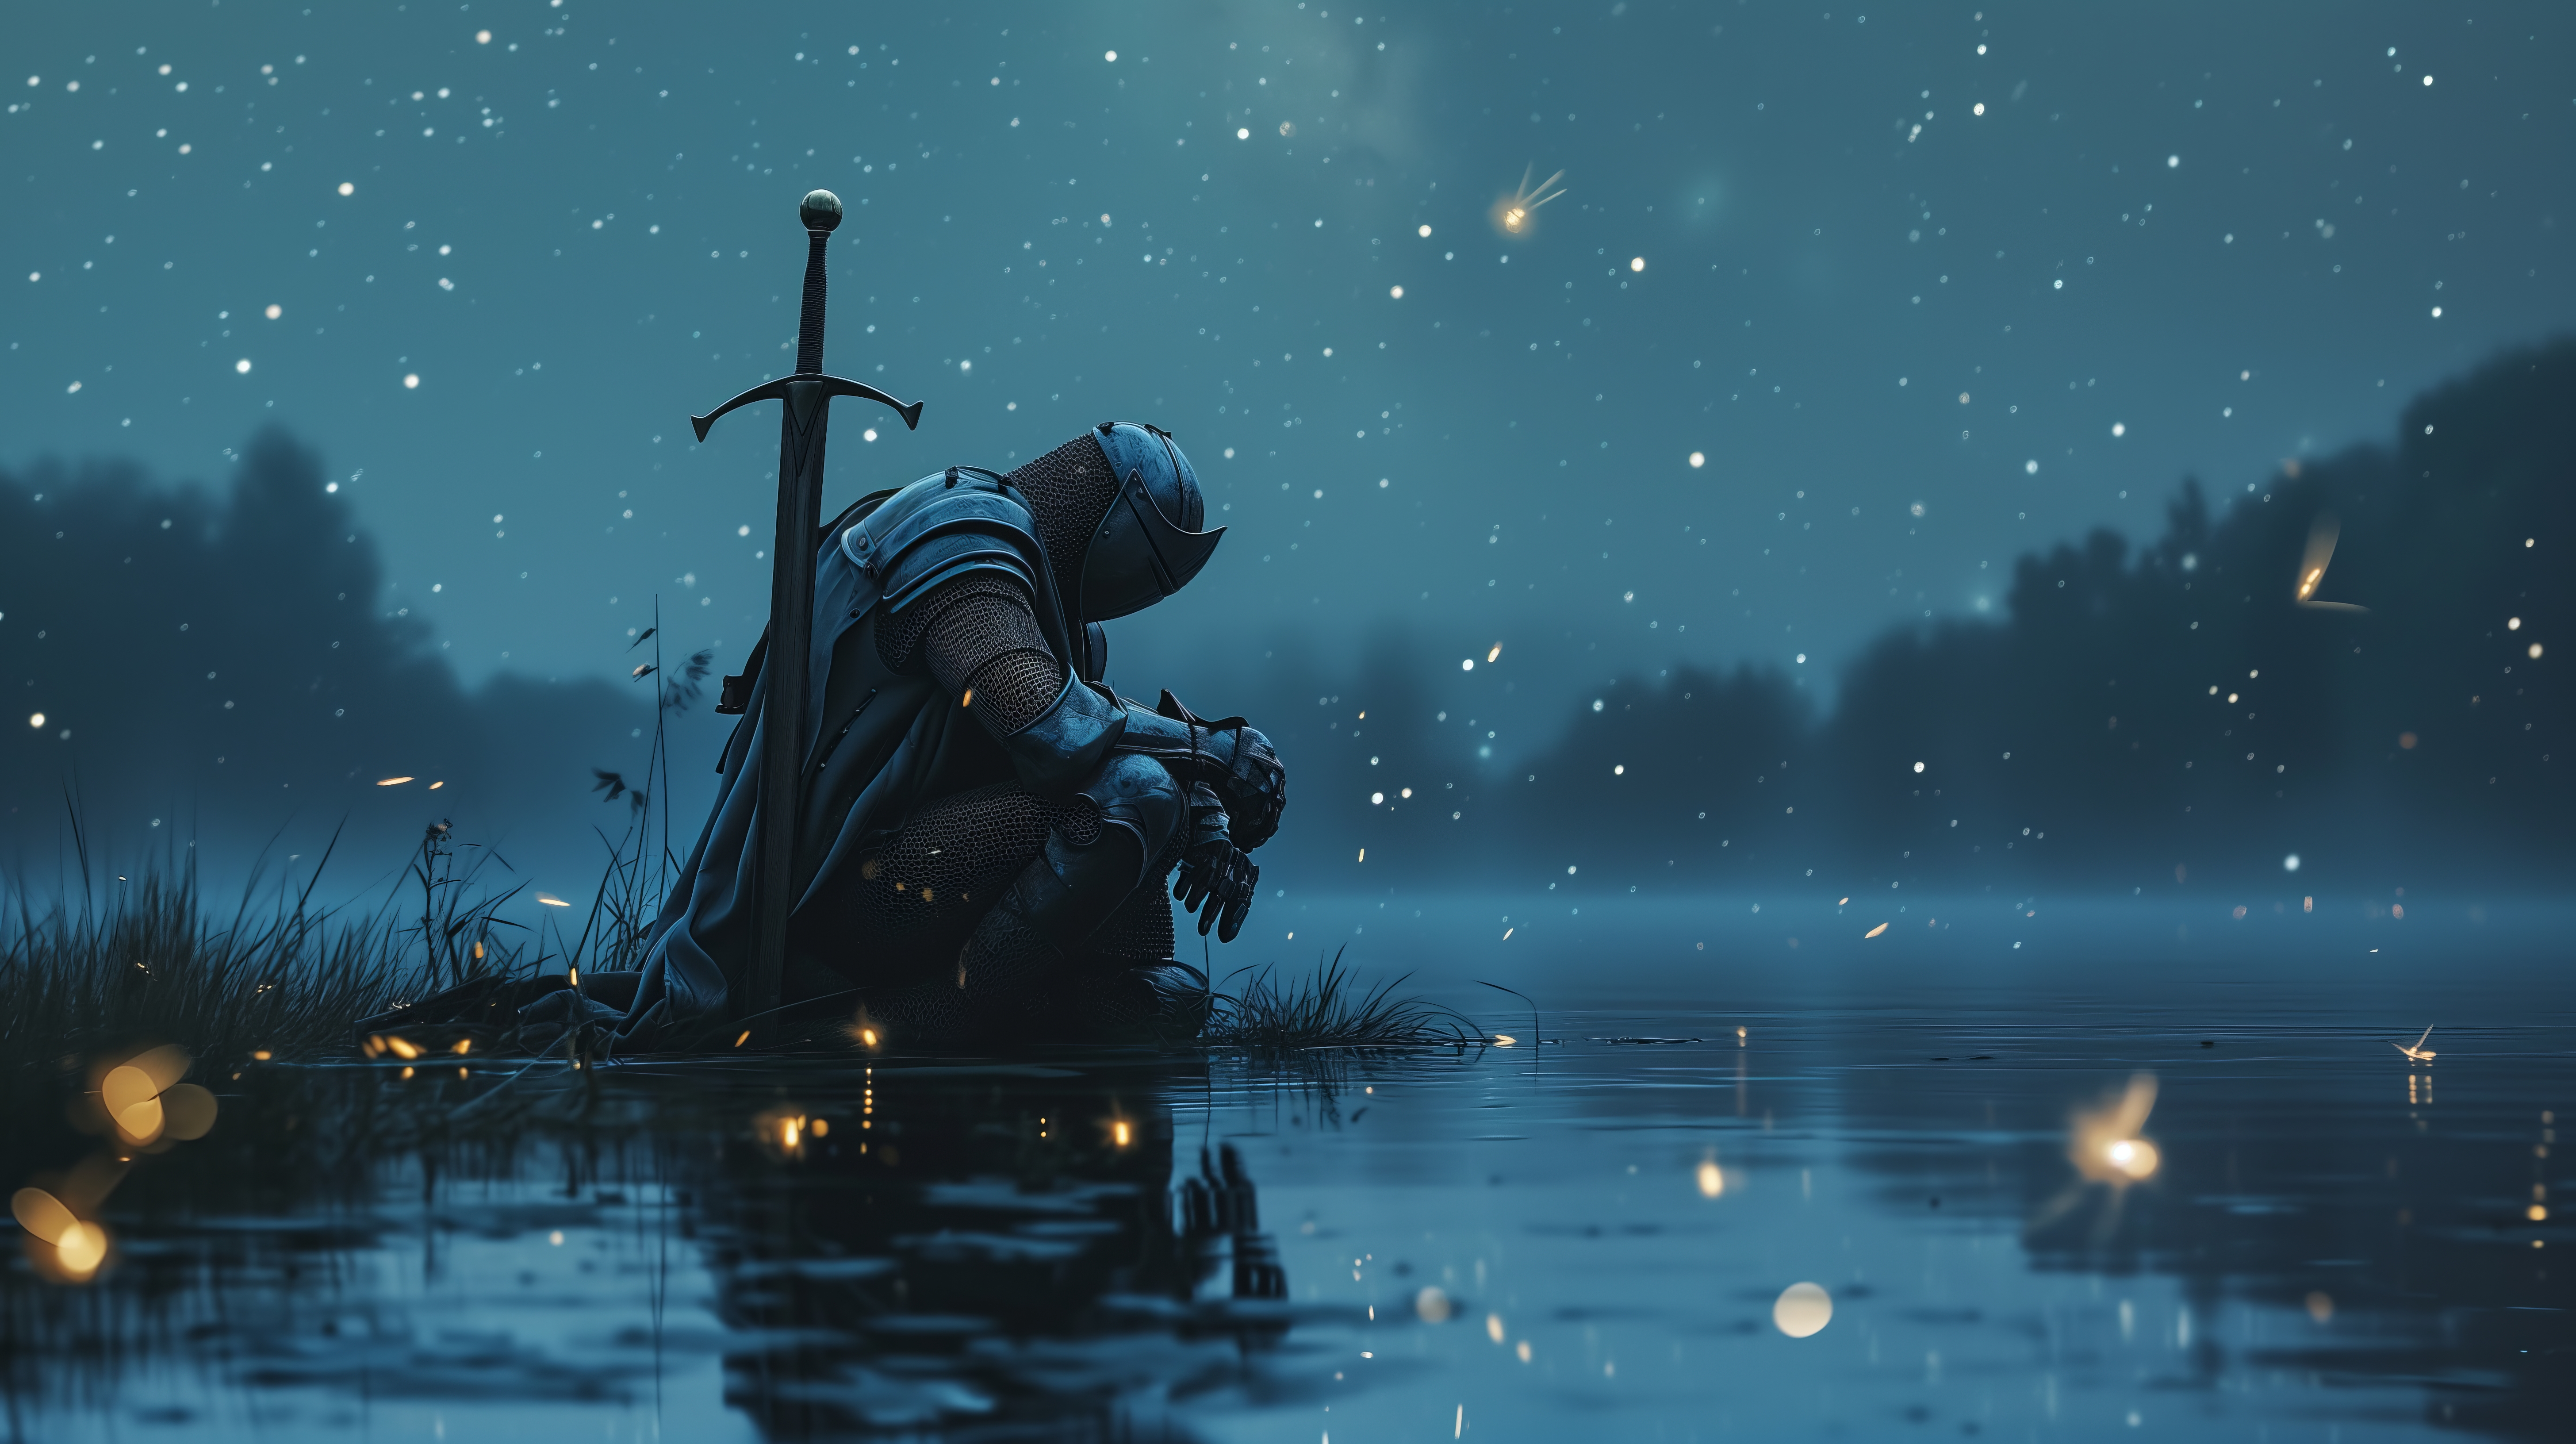 General 5824x3264 AI art knight sitting sword fireflies lake reflection blue sky water night soldier digital art